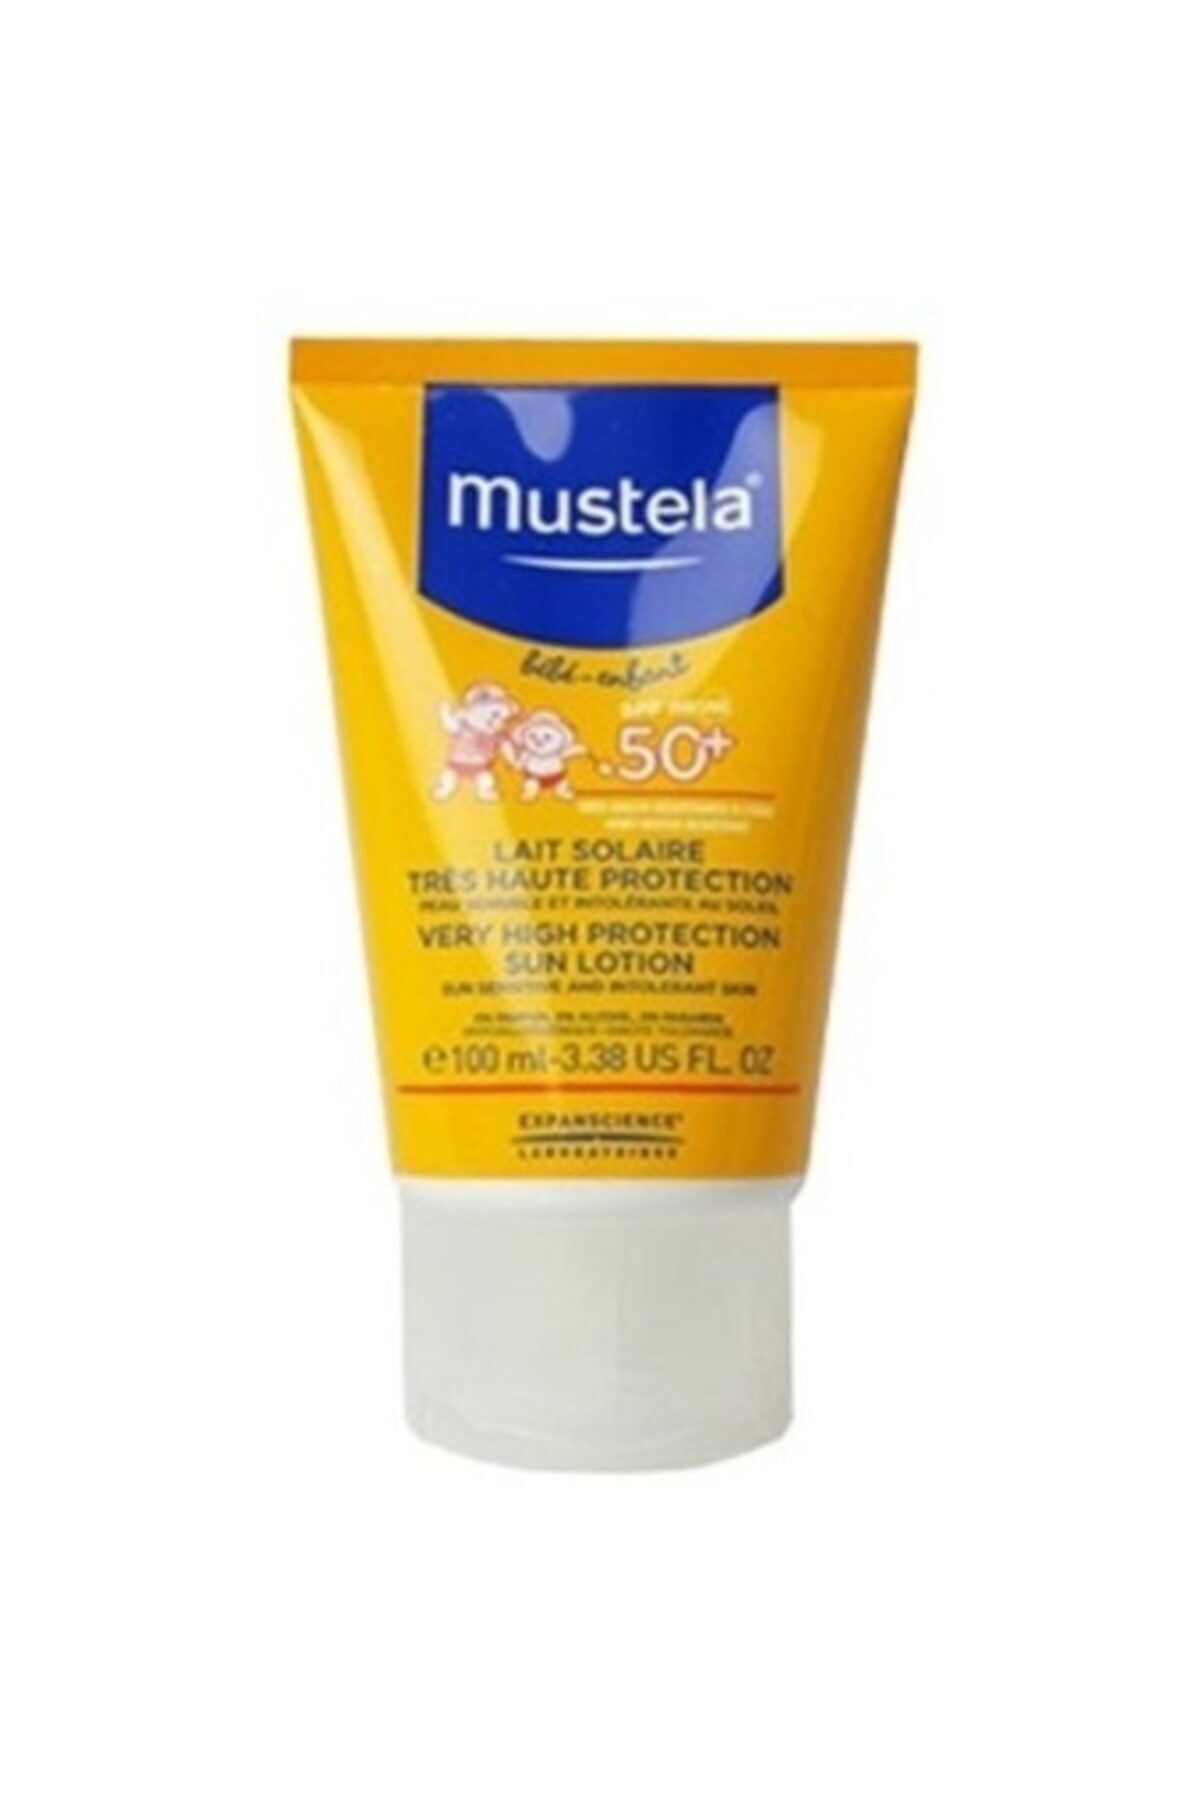 Mustela Very High Protection Sun Lotion Spf 50+ 100 ml